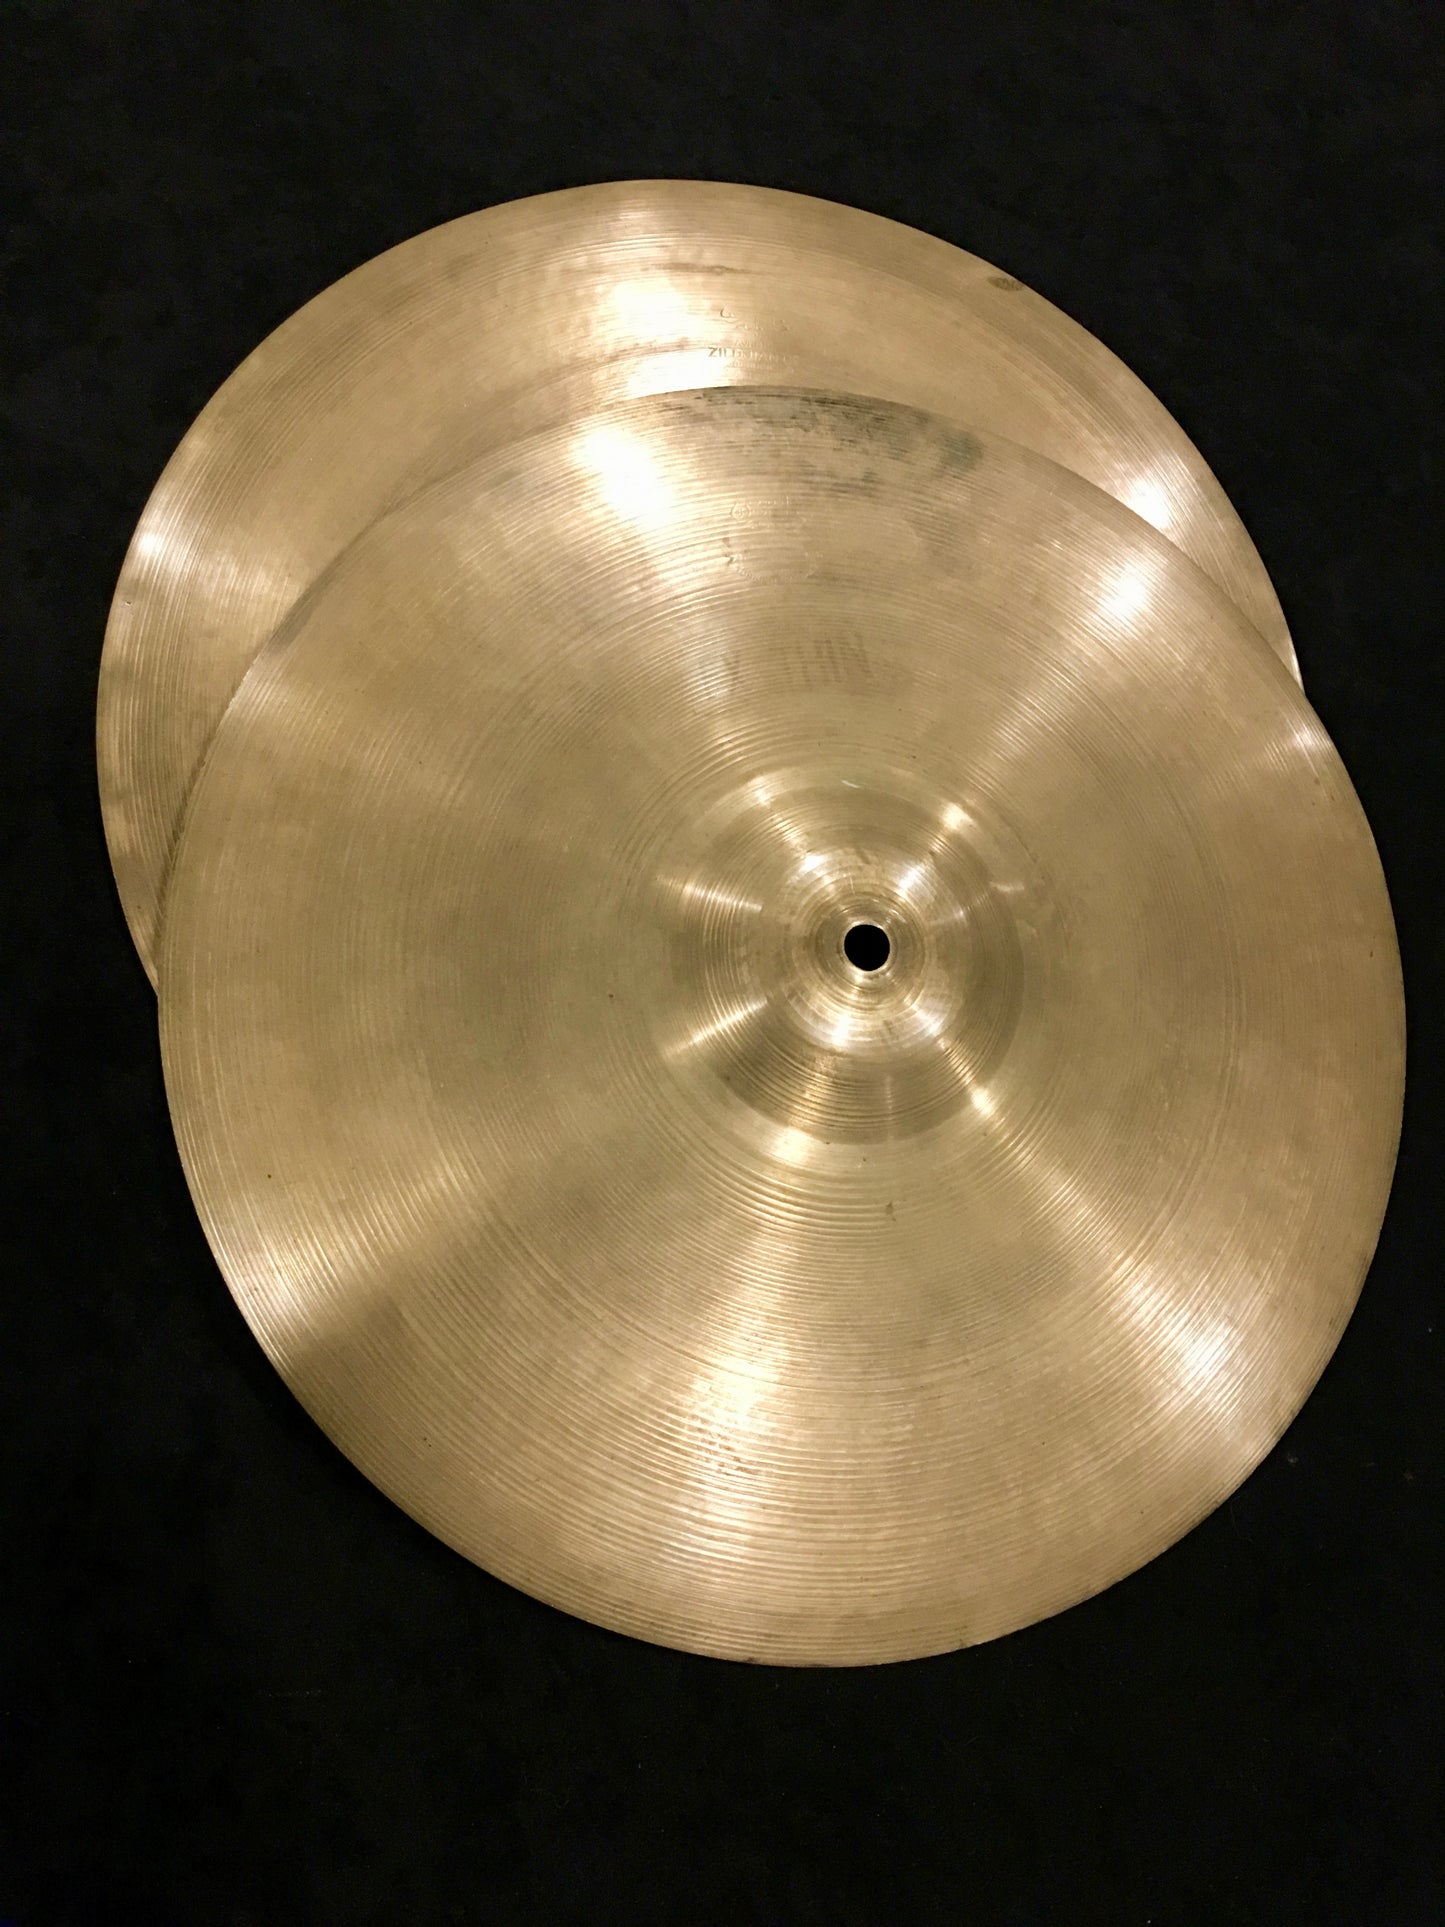 13" Vintage Zildjian A Tran Stamp Hi Hat Cymbal Pair - Light 388/458g #59